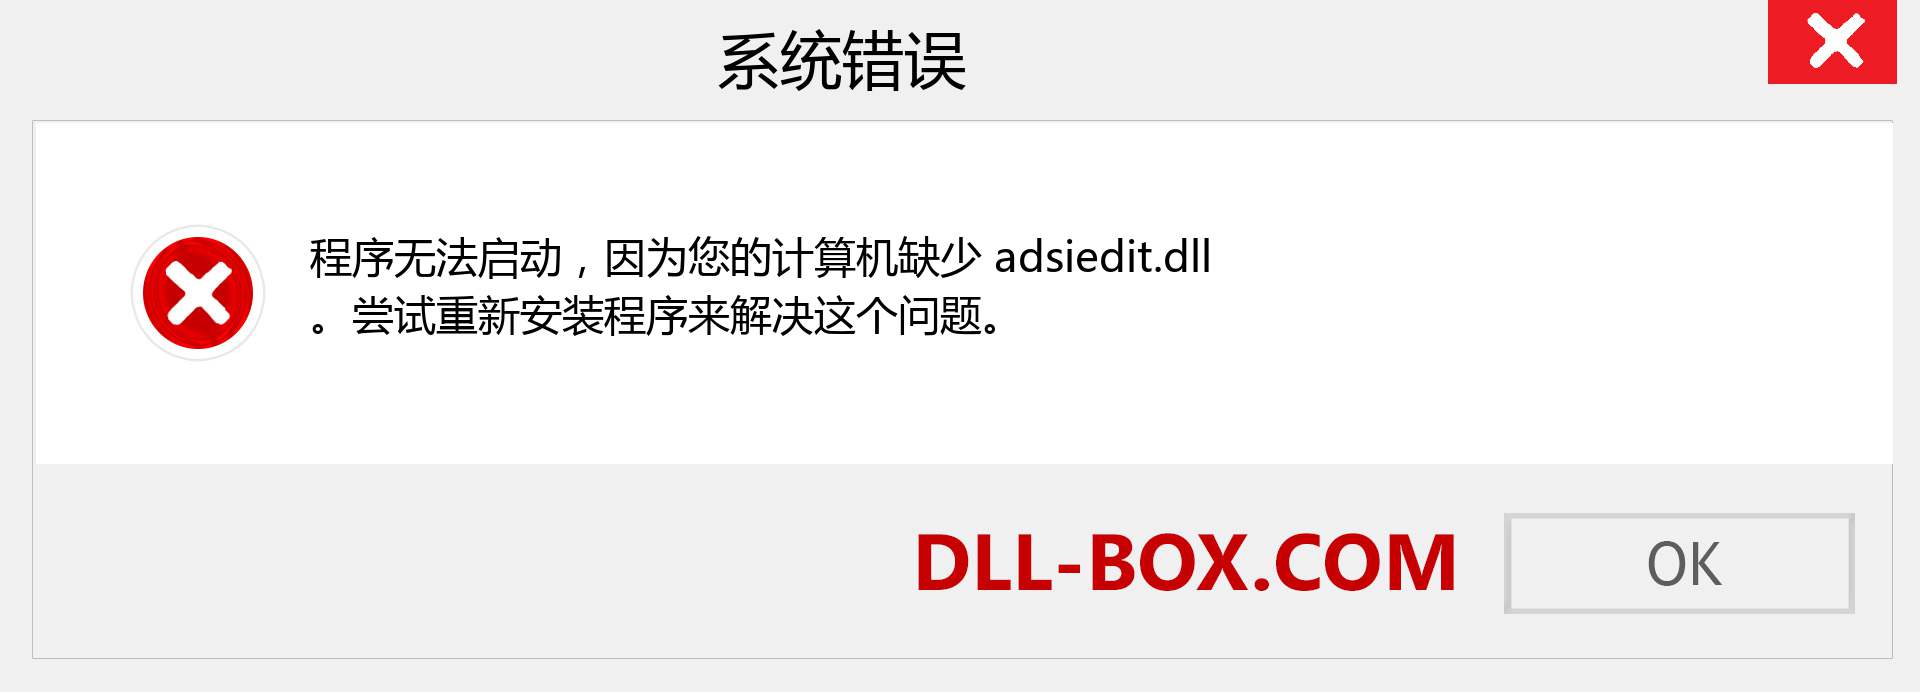 adsiedit.dll 文件丢失？。 适用于 Windows 7、8、10 的下载 - 修复 Windows、照片、图像上的 adsiedit dll 丢失错误